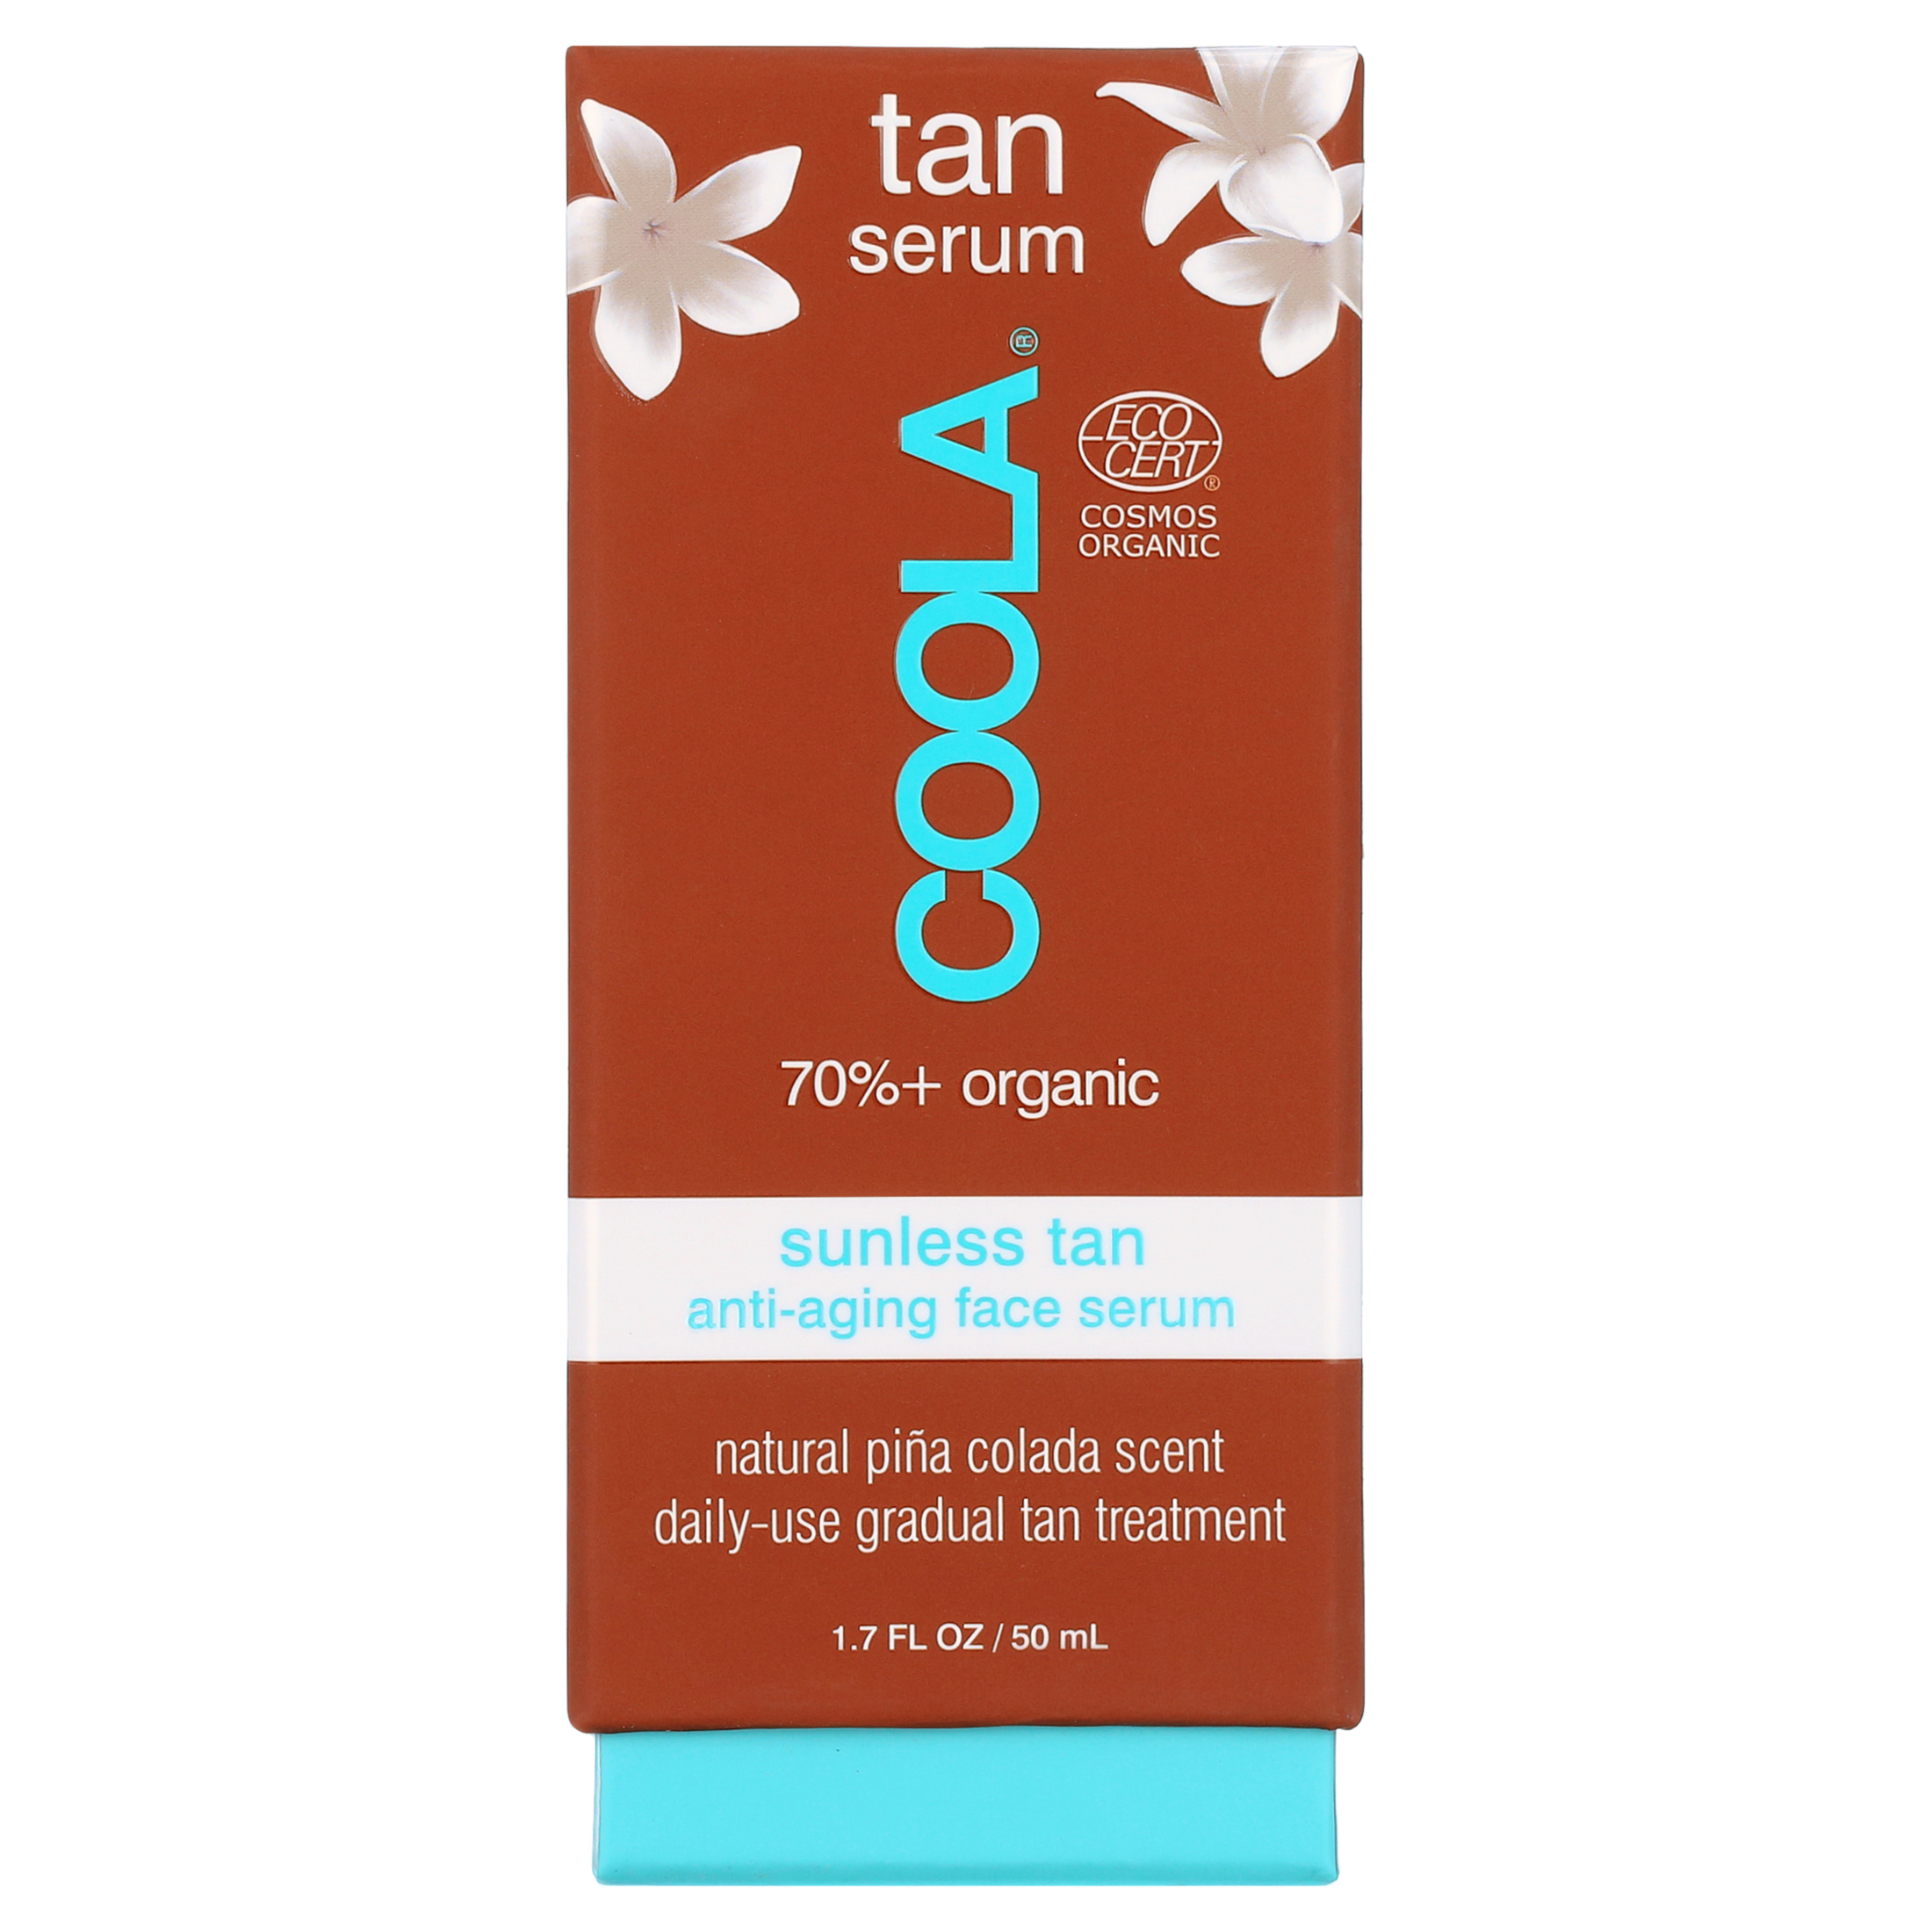 COOLA Organic Sunless Tanner Serum, Self Tan Face Serum for Anti-Aging and Skin Care, Piña Colada, 1.7 fl oz - image 2 of 10